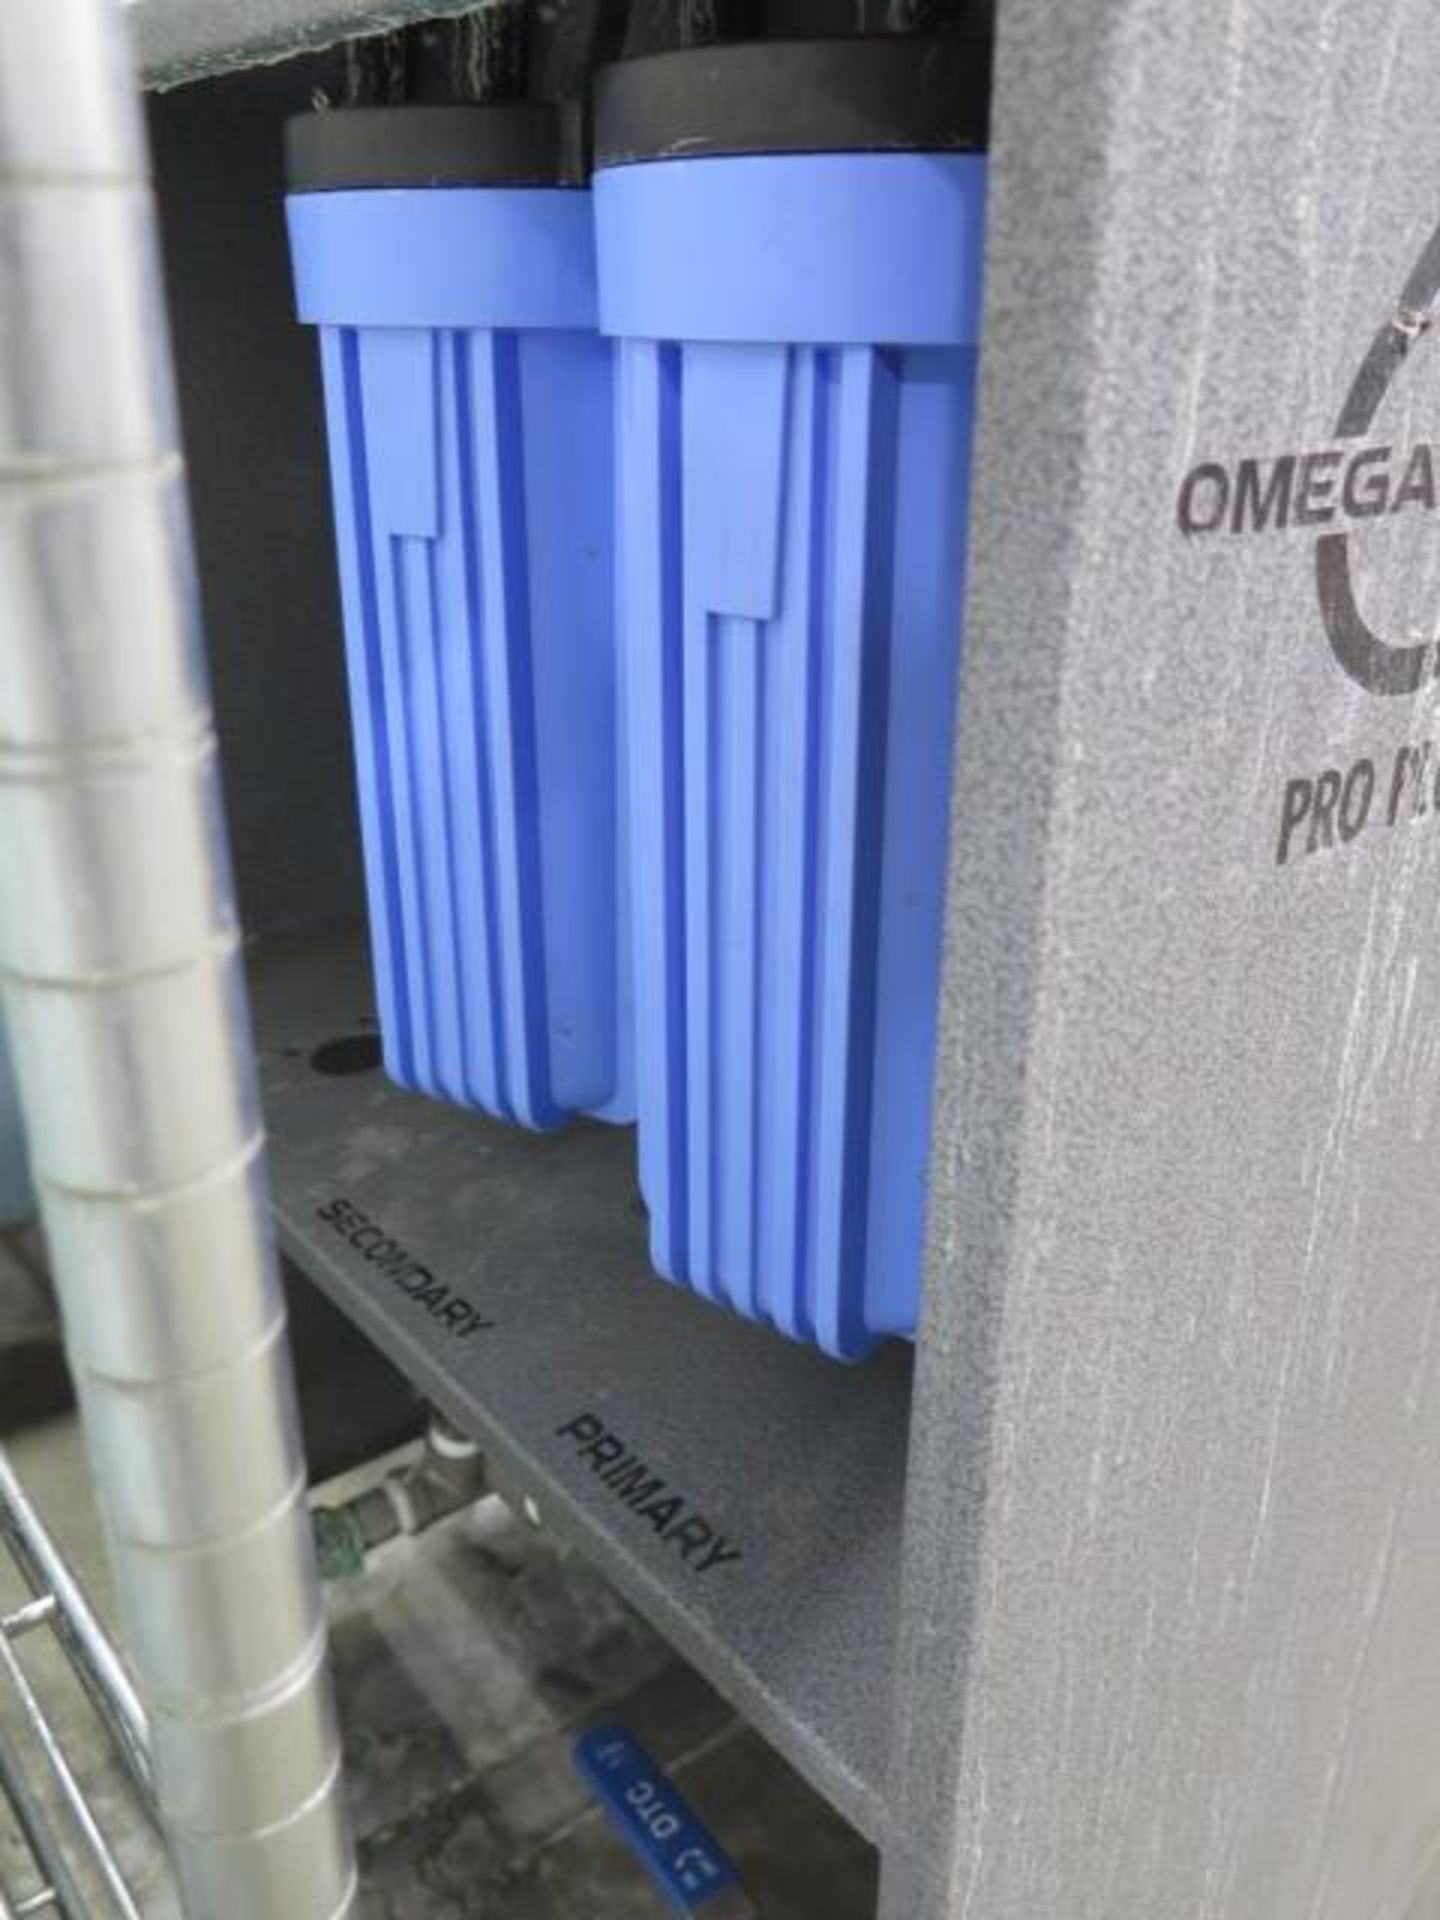 Omegasonics “Pro Plus” Ultrasonic Cleaning System s/n AR-OMG5028-193 w/ (3) DI Water Rince Tanks, - Bild 8 aus 9